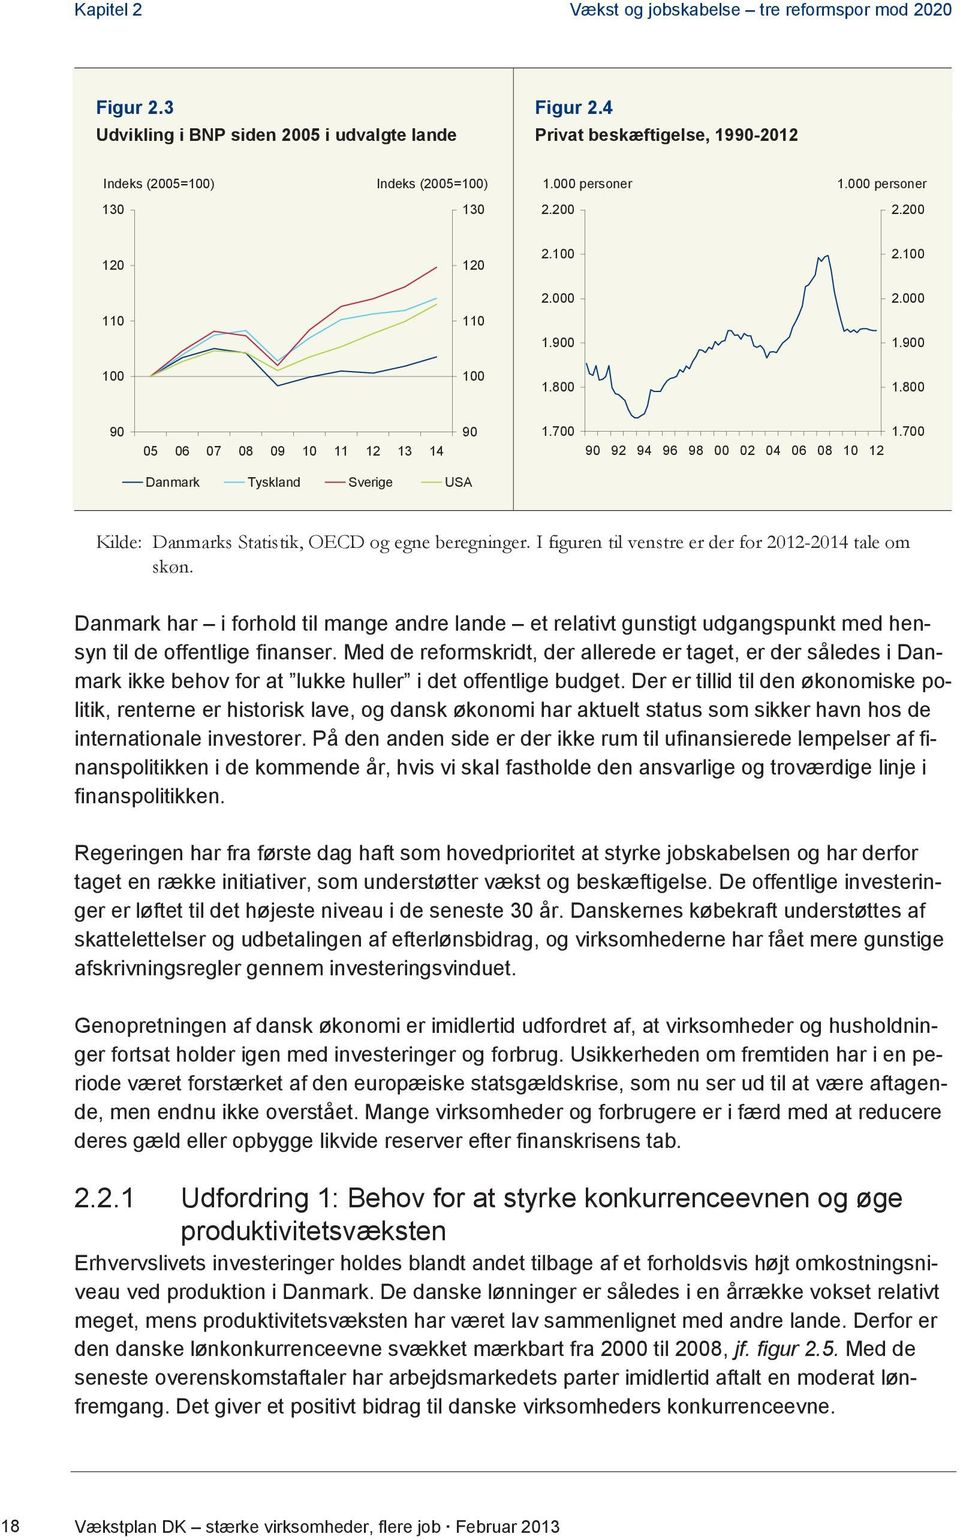 700 90 92 94 96 98 00 02 04 06 08 10 12 Danmark Tyskland Sverige USA Kilde: Danmarks Statistik, OECD og egne beregninger. I figuren til venstre er der for 2012-2014 tale om skøn.